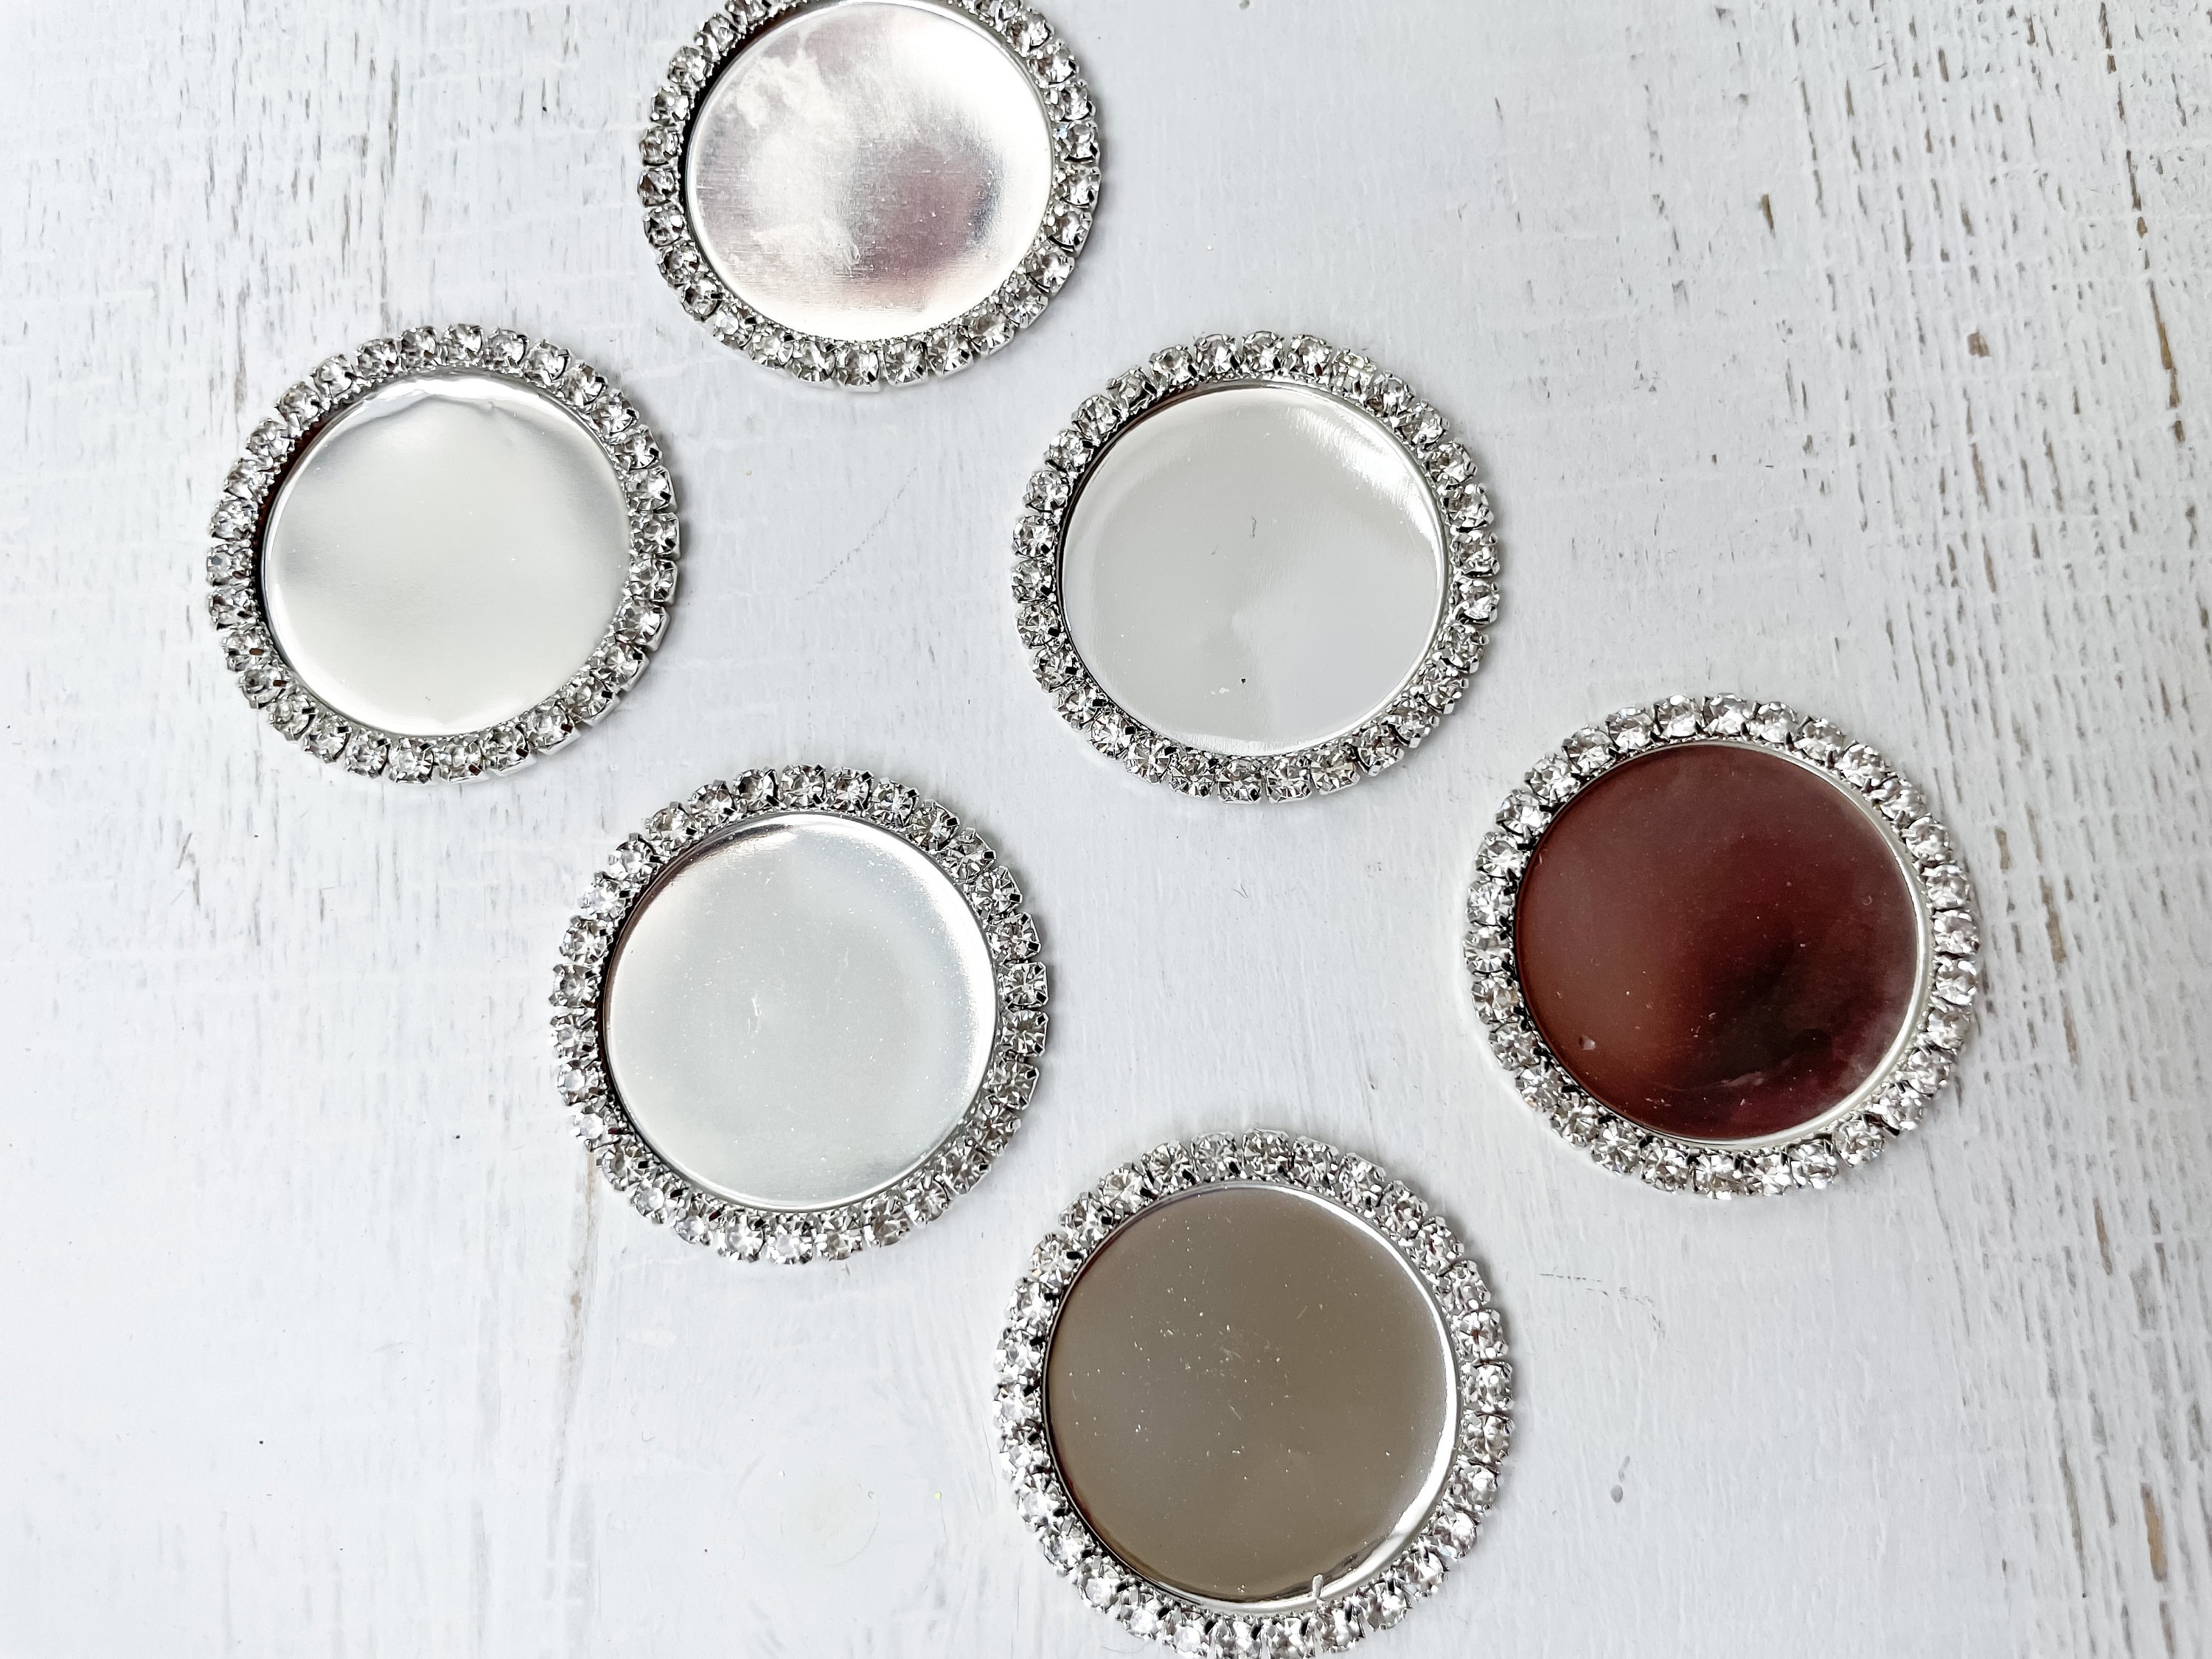 TISHAA Bling Decorative Tray Holder – Makeup Cosmetic Jewelry Ring Key Display Dish Plate Storage Organizer Crystal Rhinestone Glitter Vanity Bathroom